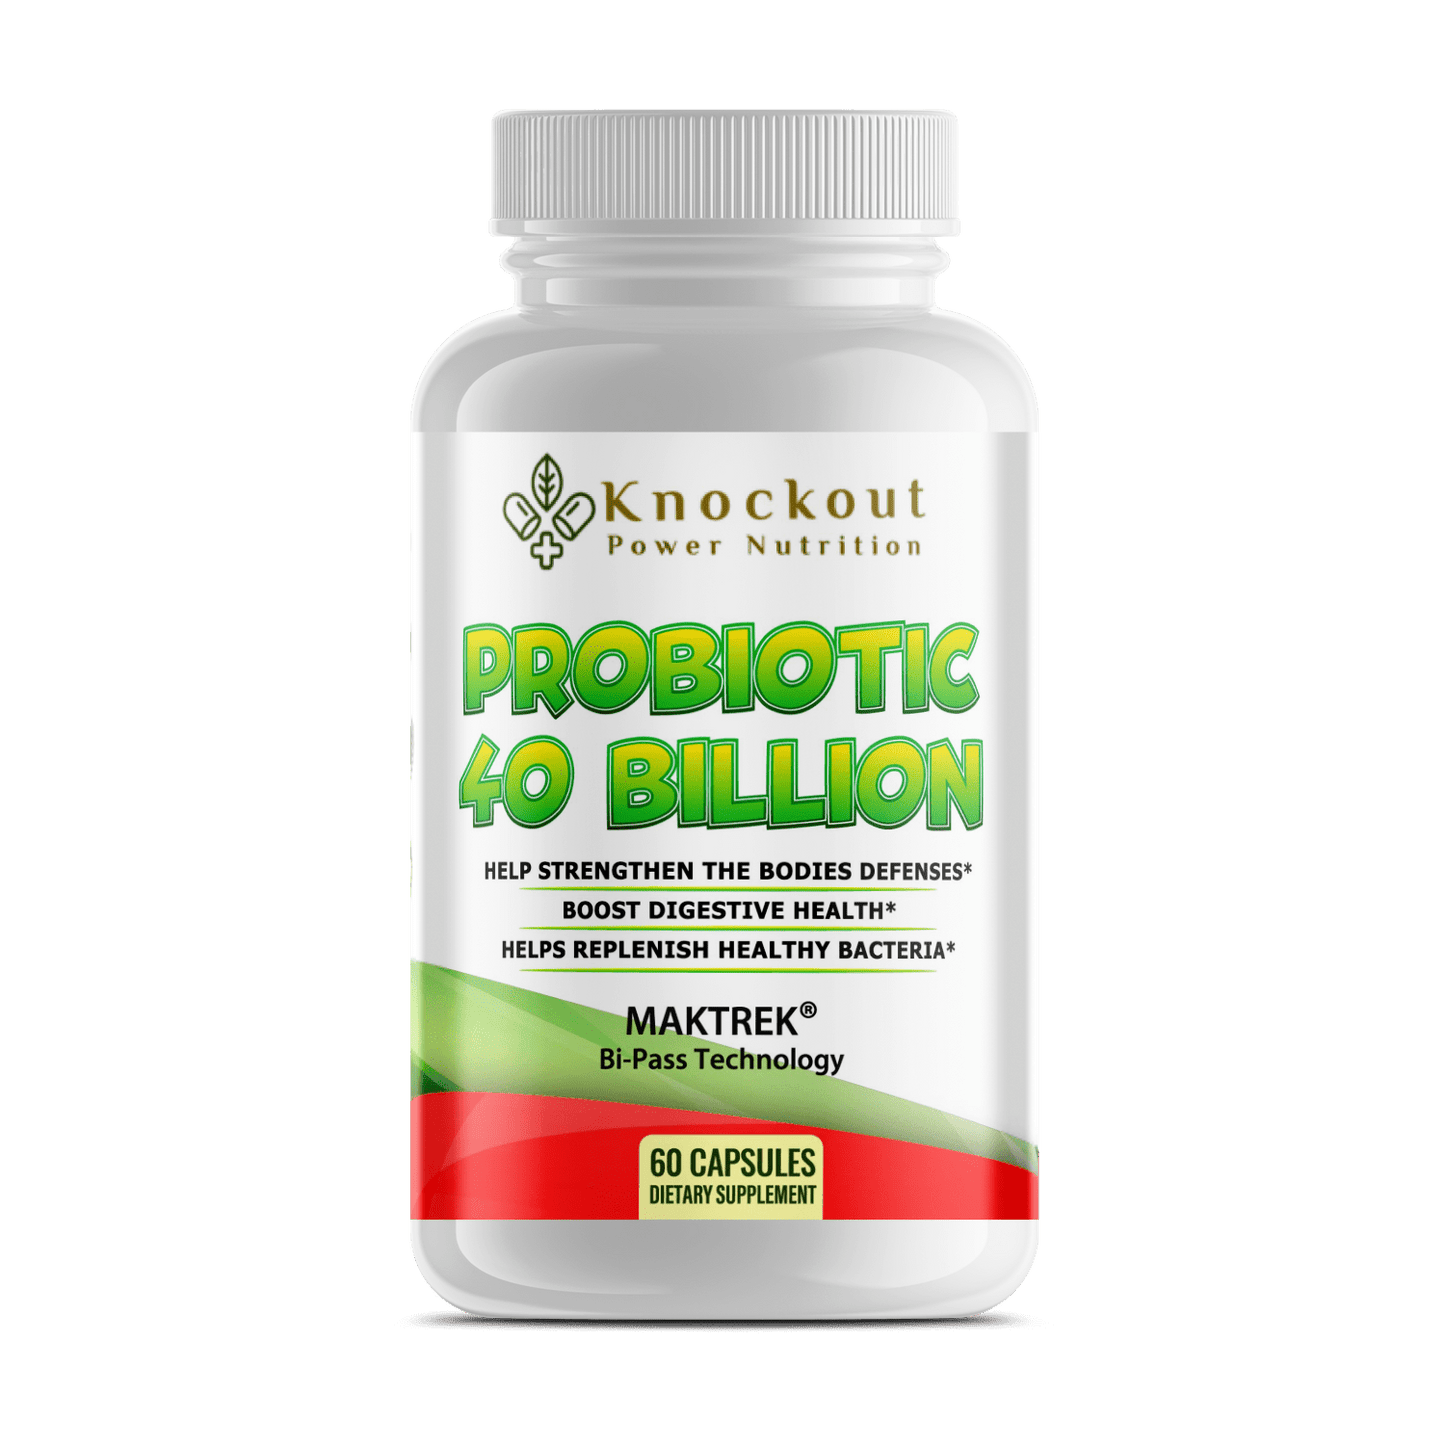 Probiotic-40 Billion - Boost Digestive Health